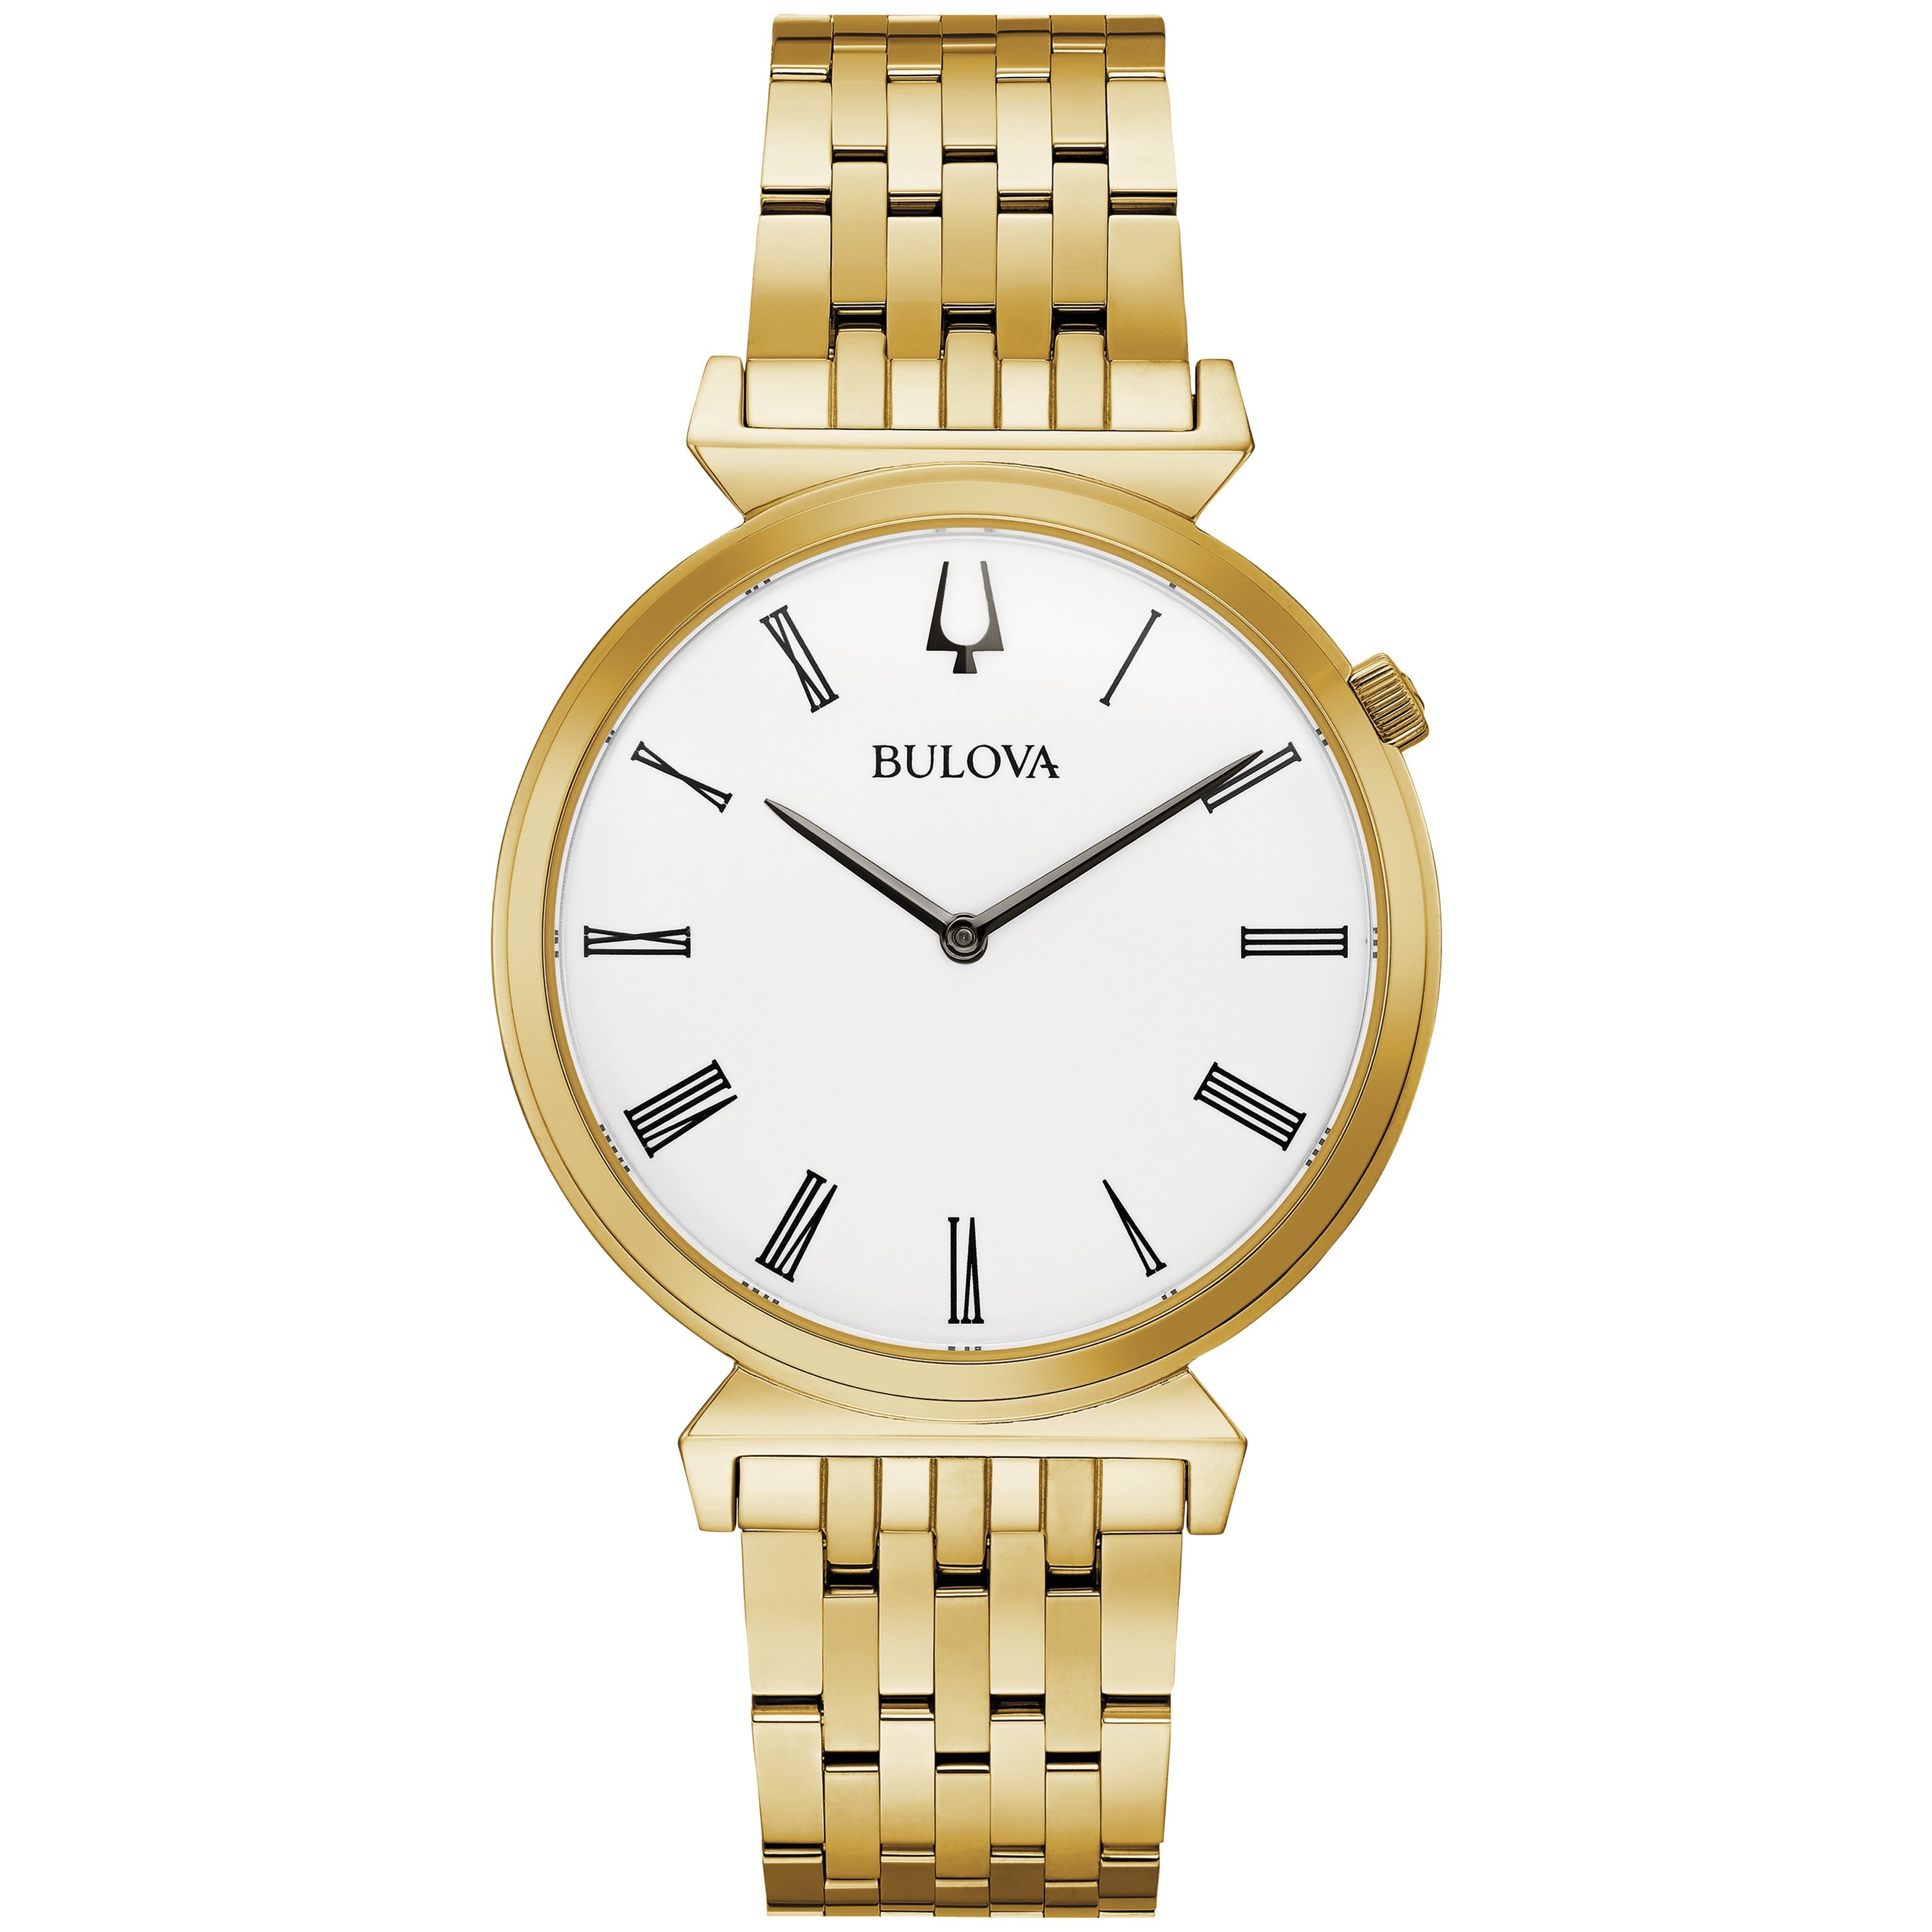 Men's Regatta Gold-Tone Stainless Steel Watch, White Dial